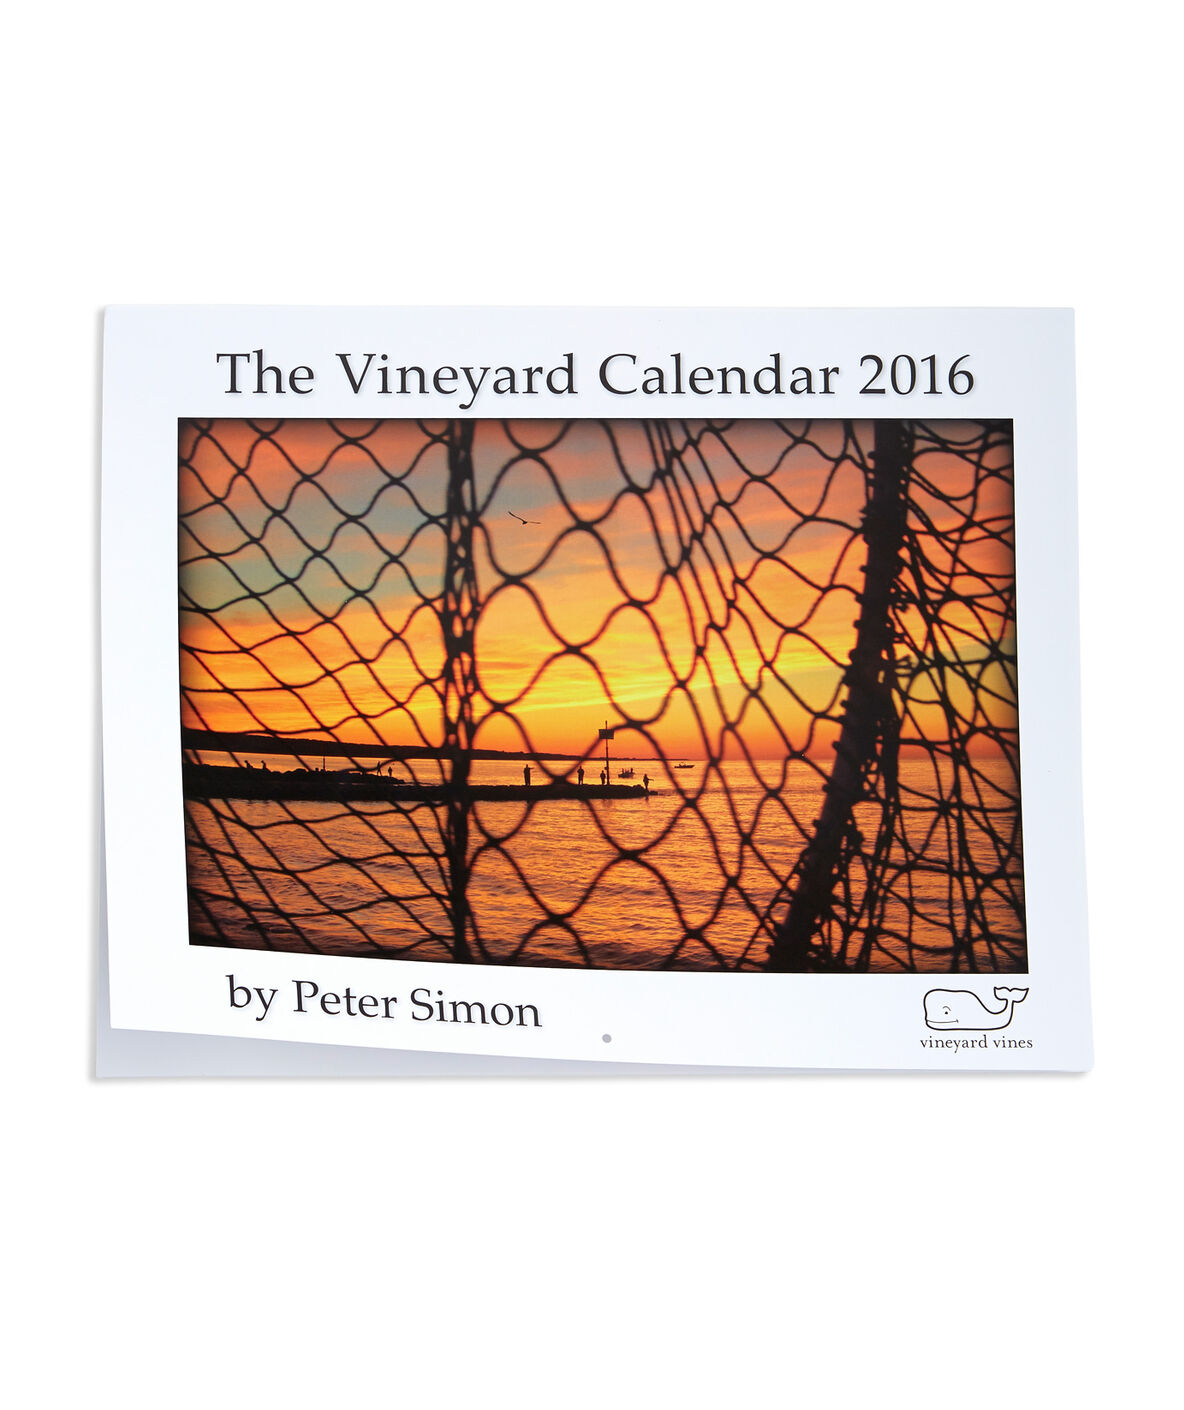 Shop The Vineyard Calendar 2016 at vineyard vines